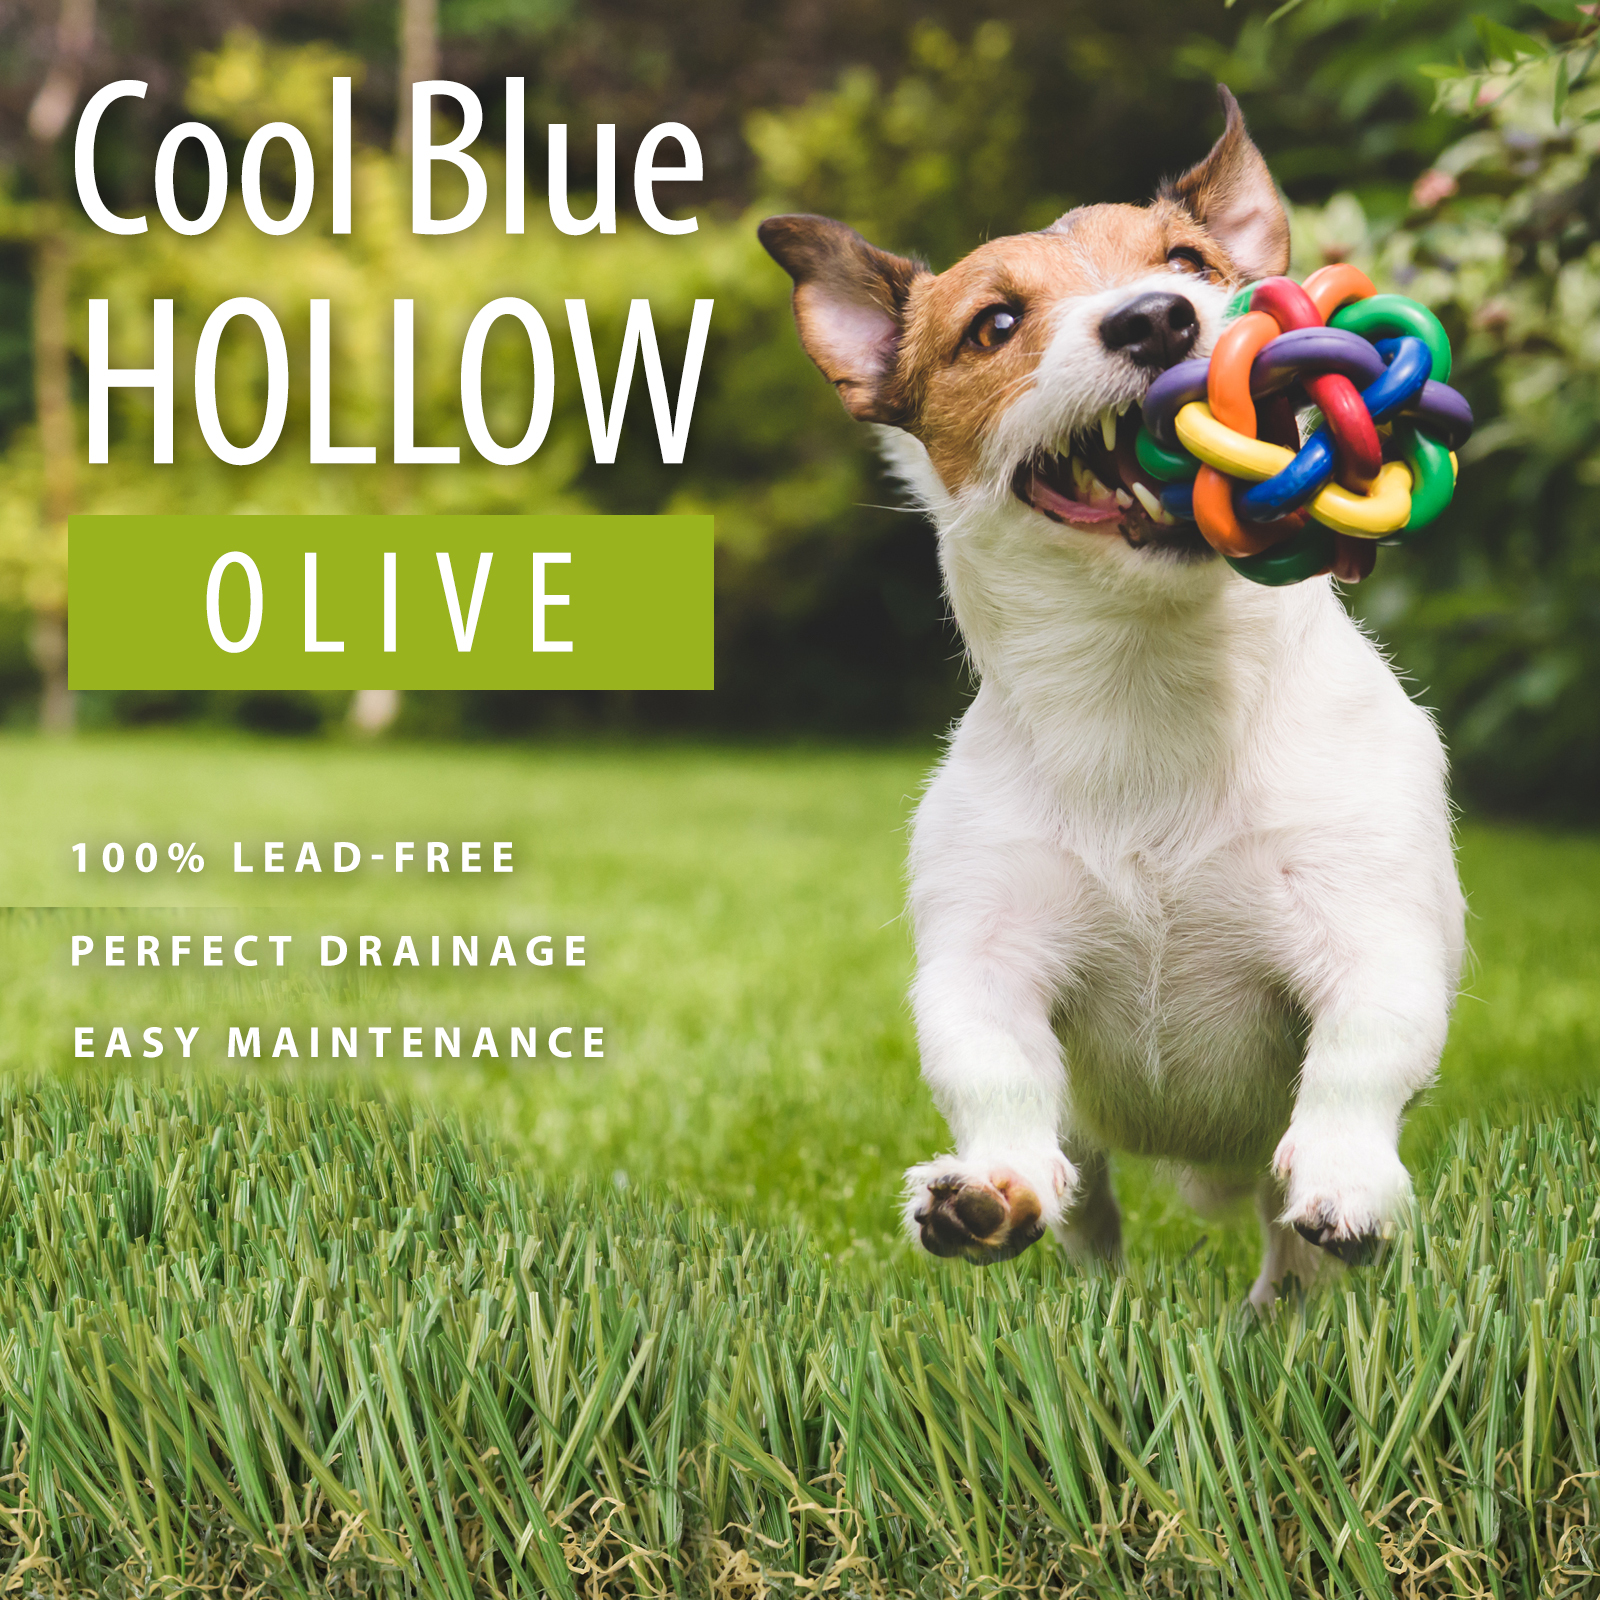 cool-blue-hollow-olive-dog.jpg Artificial Grass